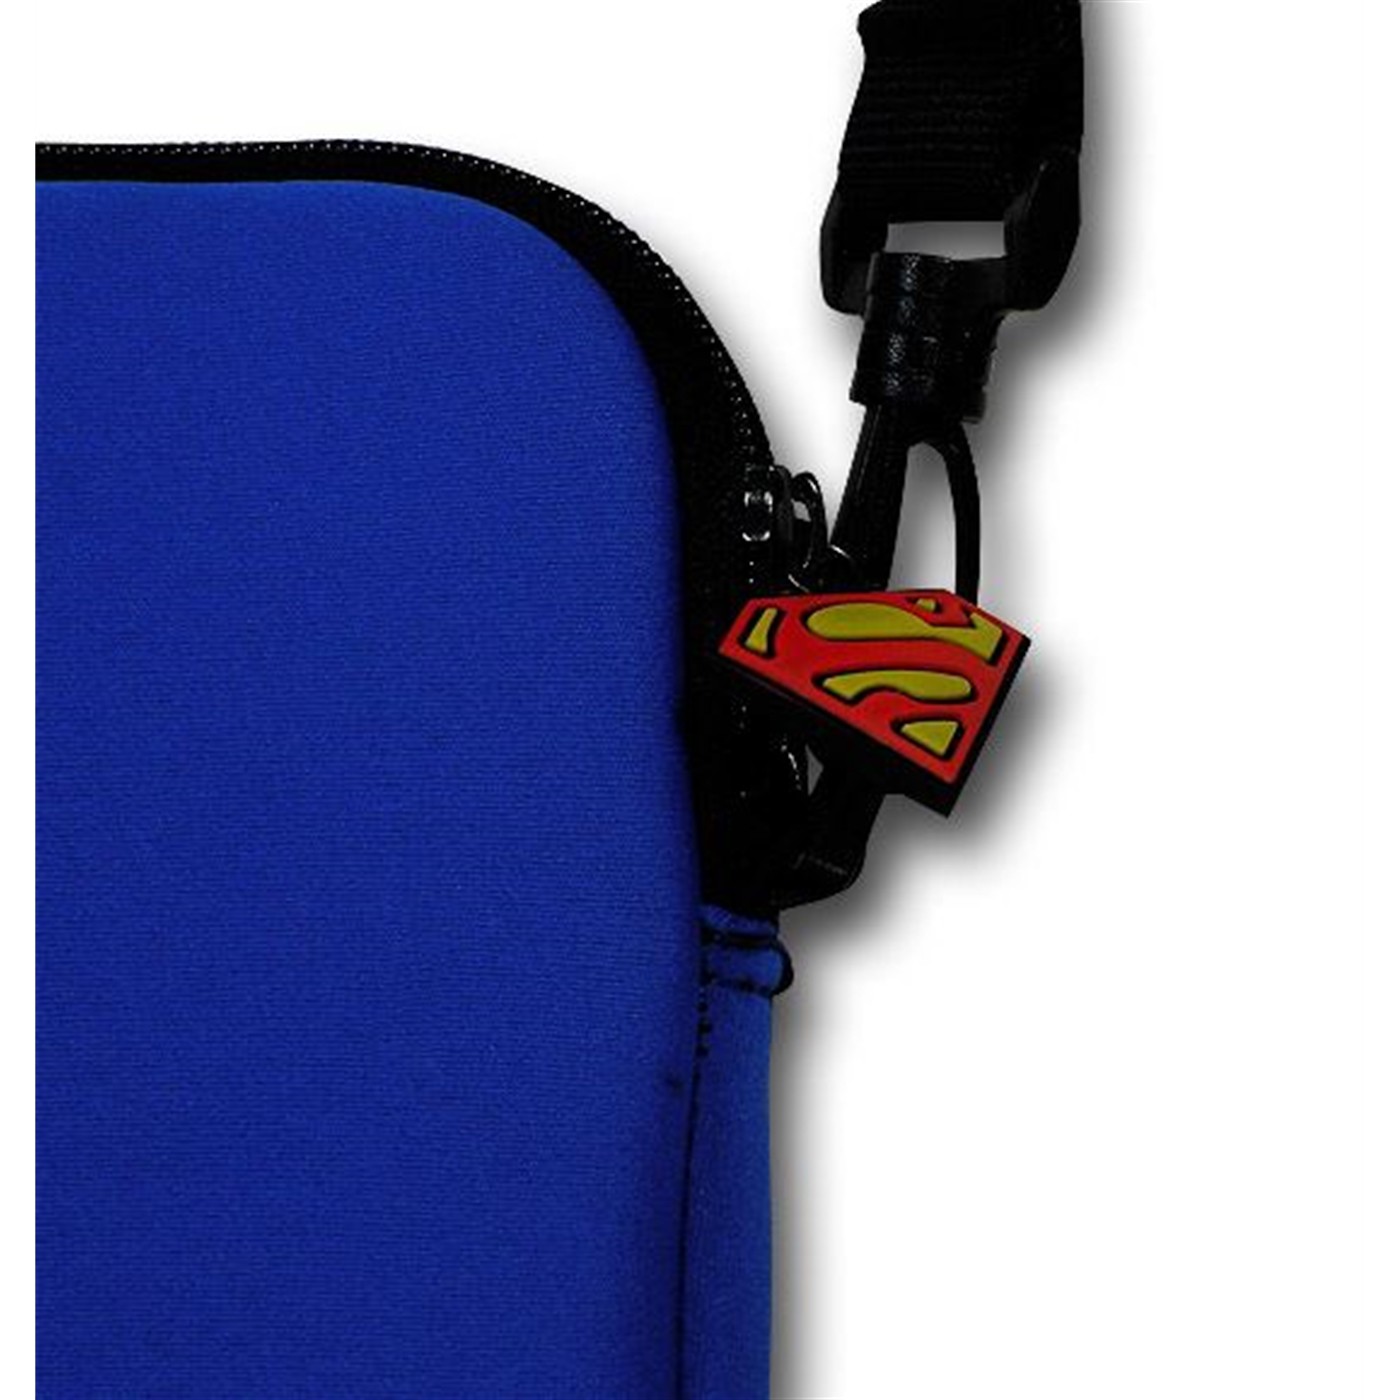 Superman Symbol Soft Laptop Bag